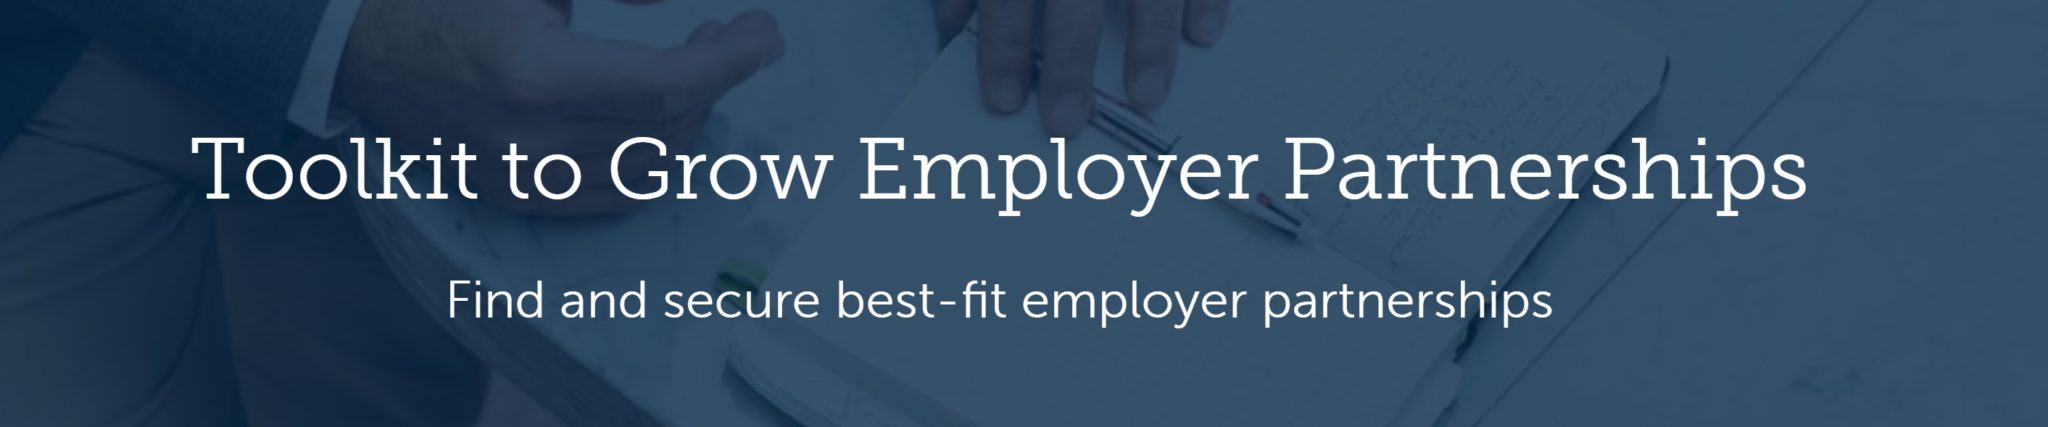 Screenshot Employer Partnership Toolkit